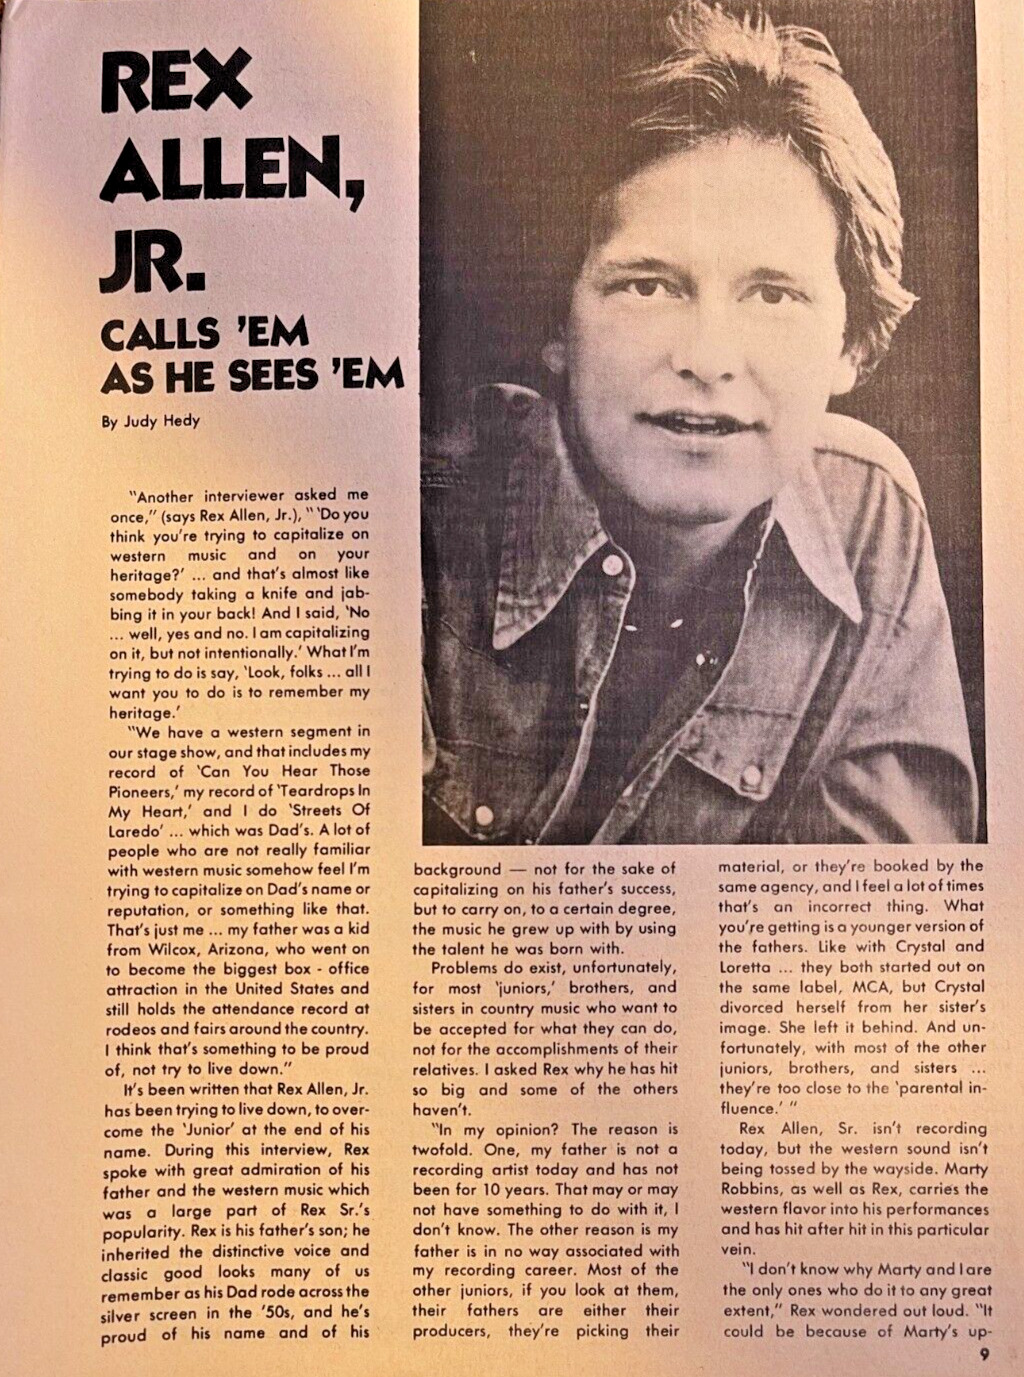 1979 Country Singer Rex Allen Jr.